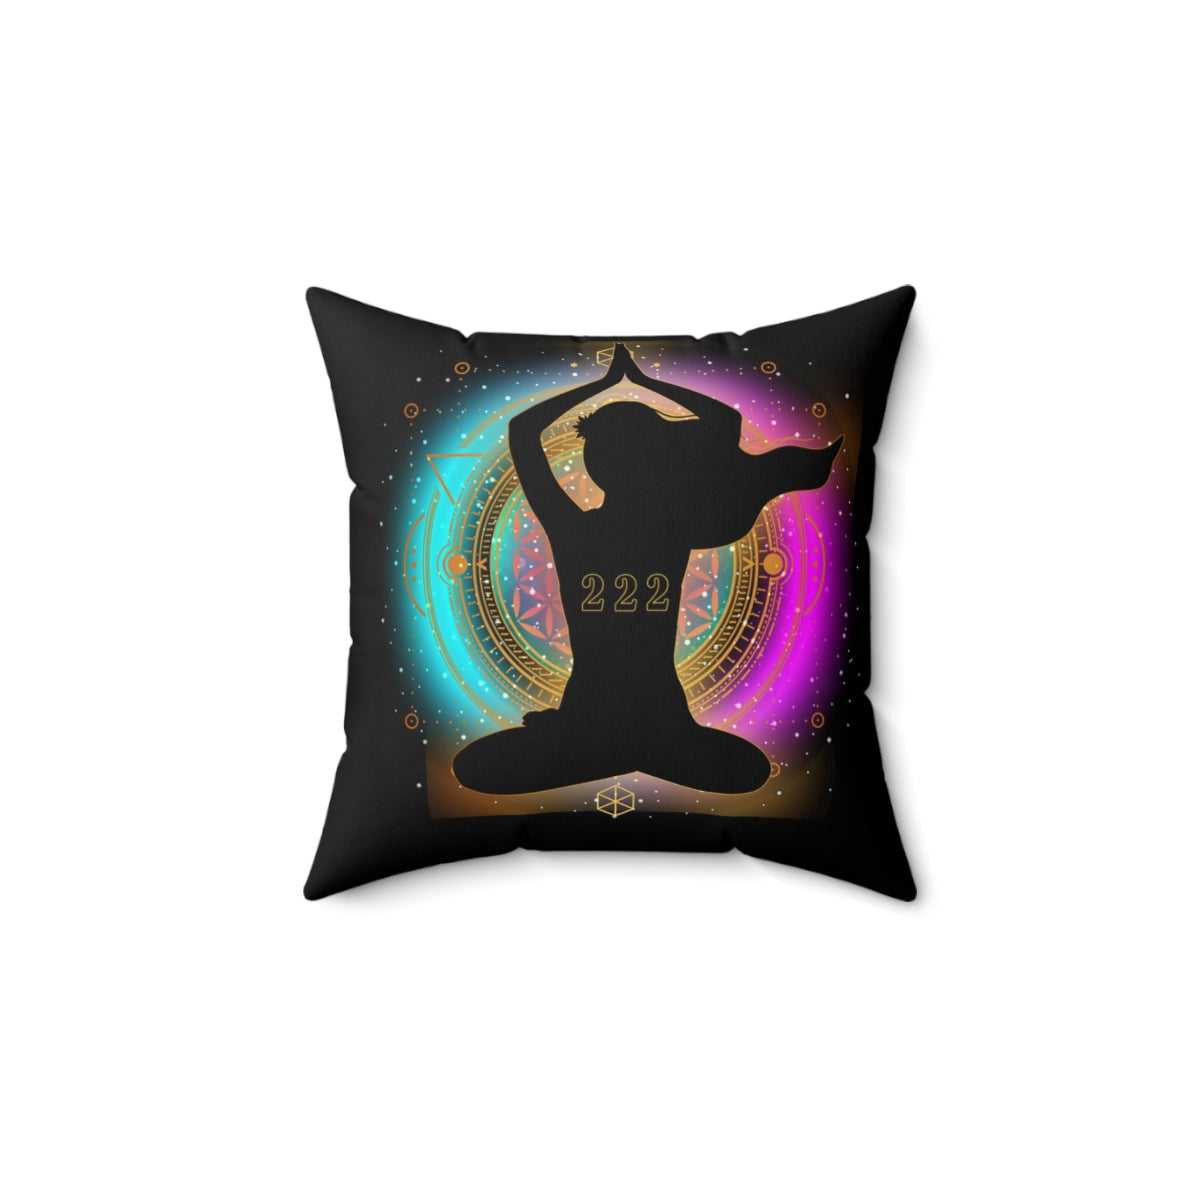 Yoga Spiritual Meditation Spun Polyester Square Pillow - Alignment 222 Angel Number Printify